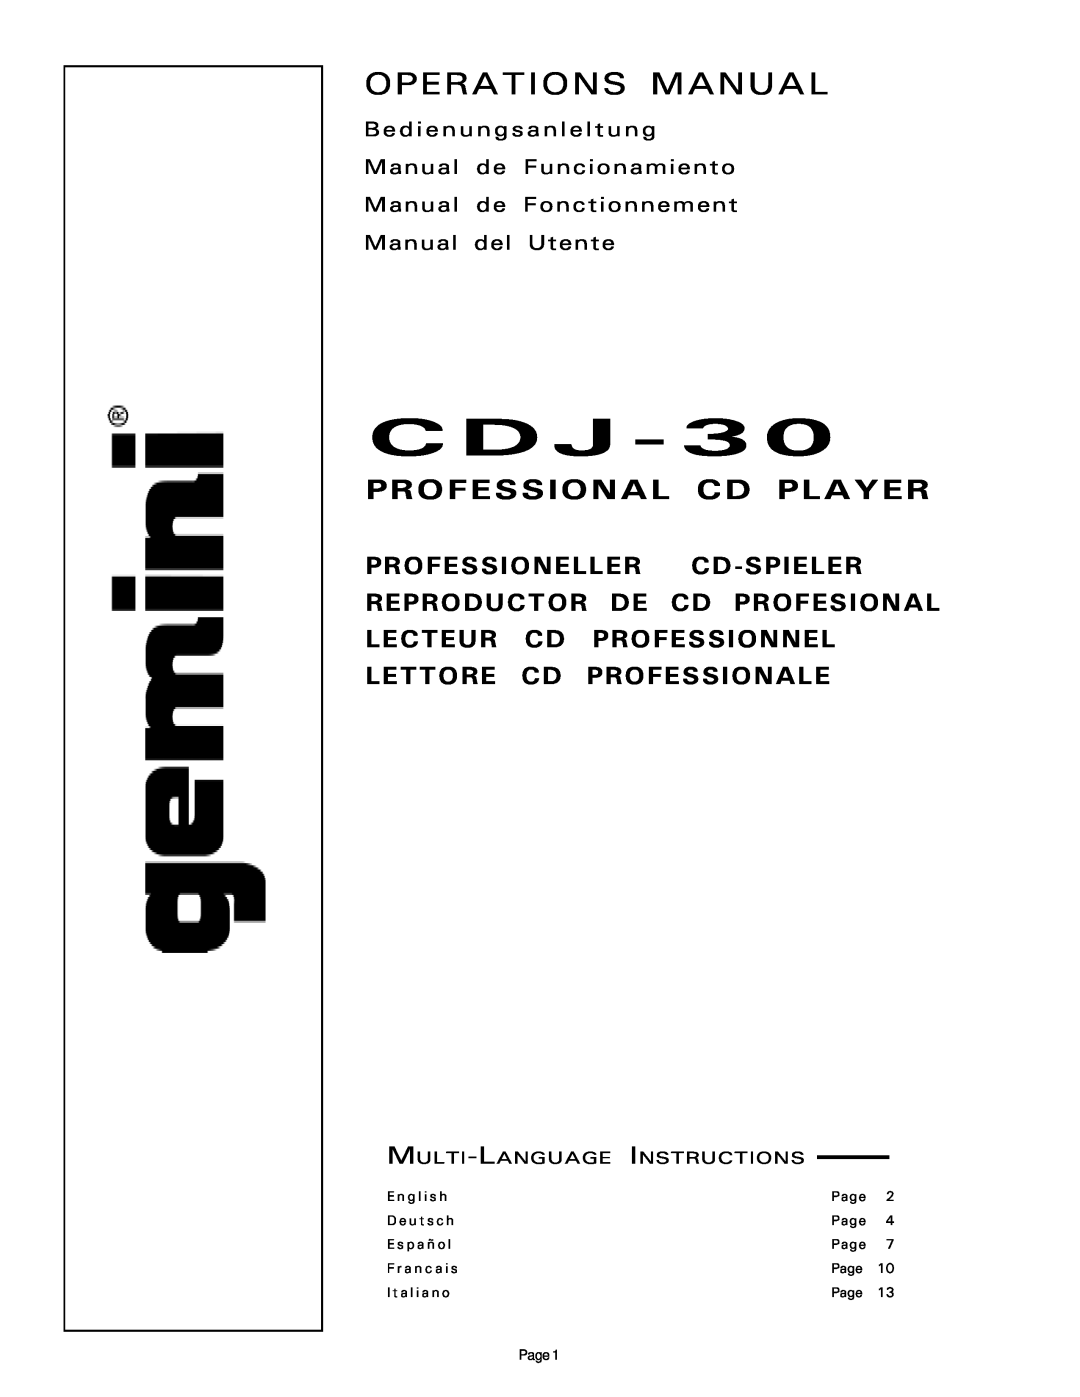 Gemini CDJ-30 manual B e d i e n u n g s a n l e l t u n g, Manual de Funcionamiento Manual de Fonctionnement, Cdj 